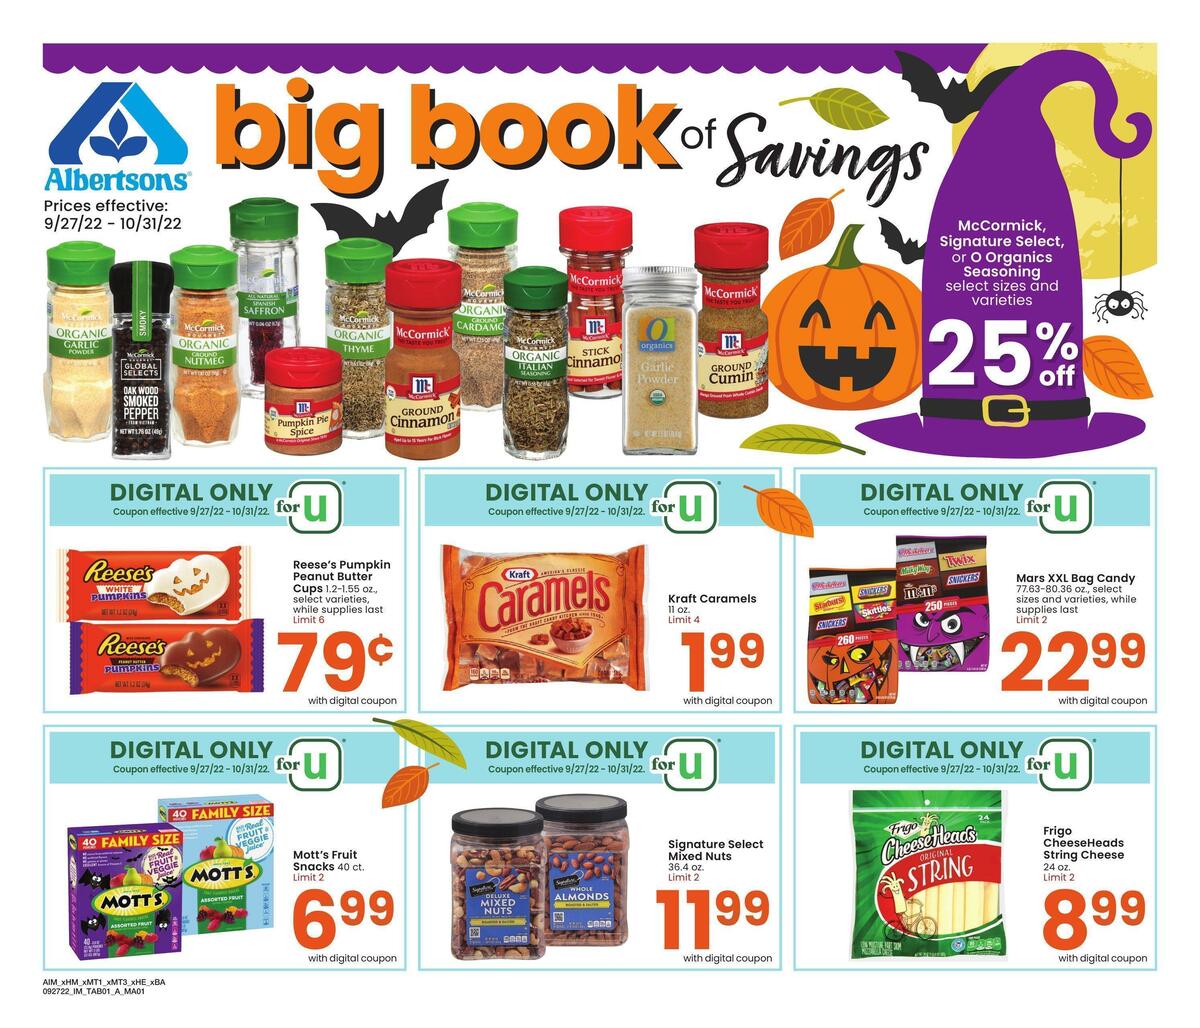 Albertsons Big Book of Savings Weekly Ad from September 27